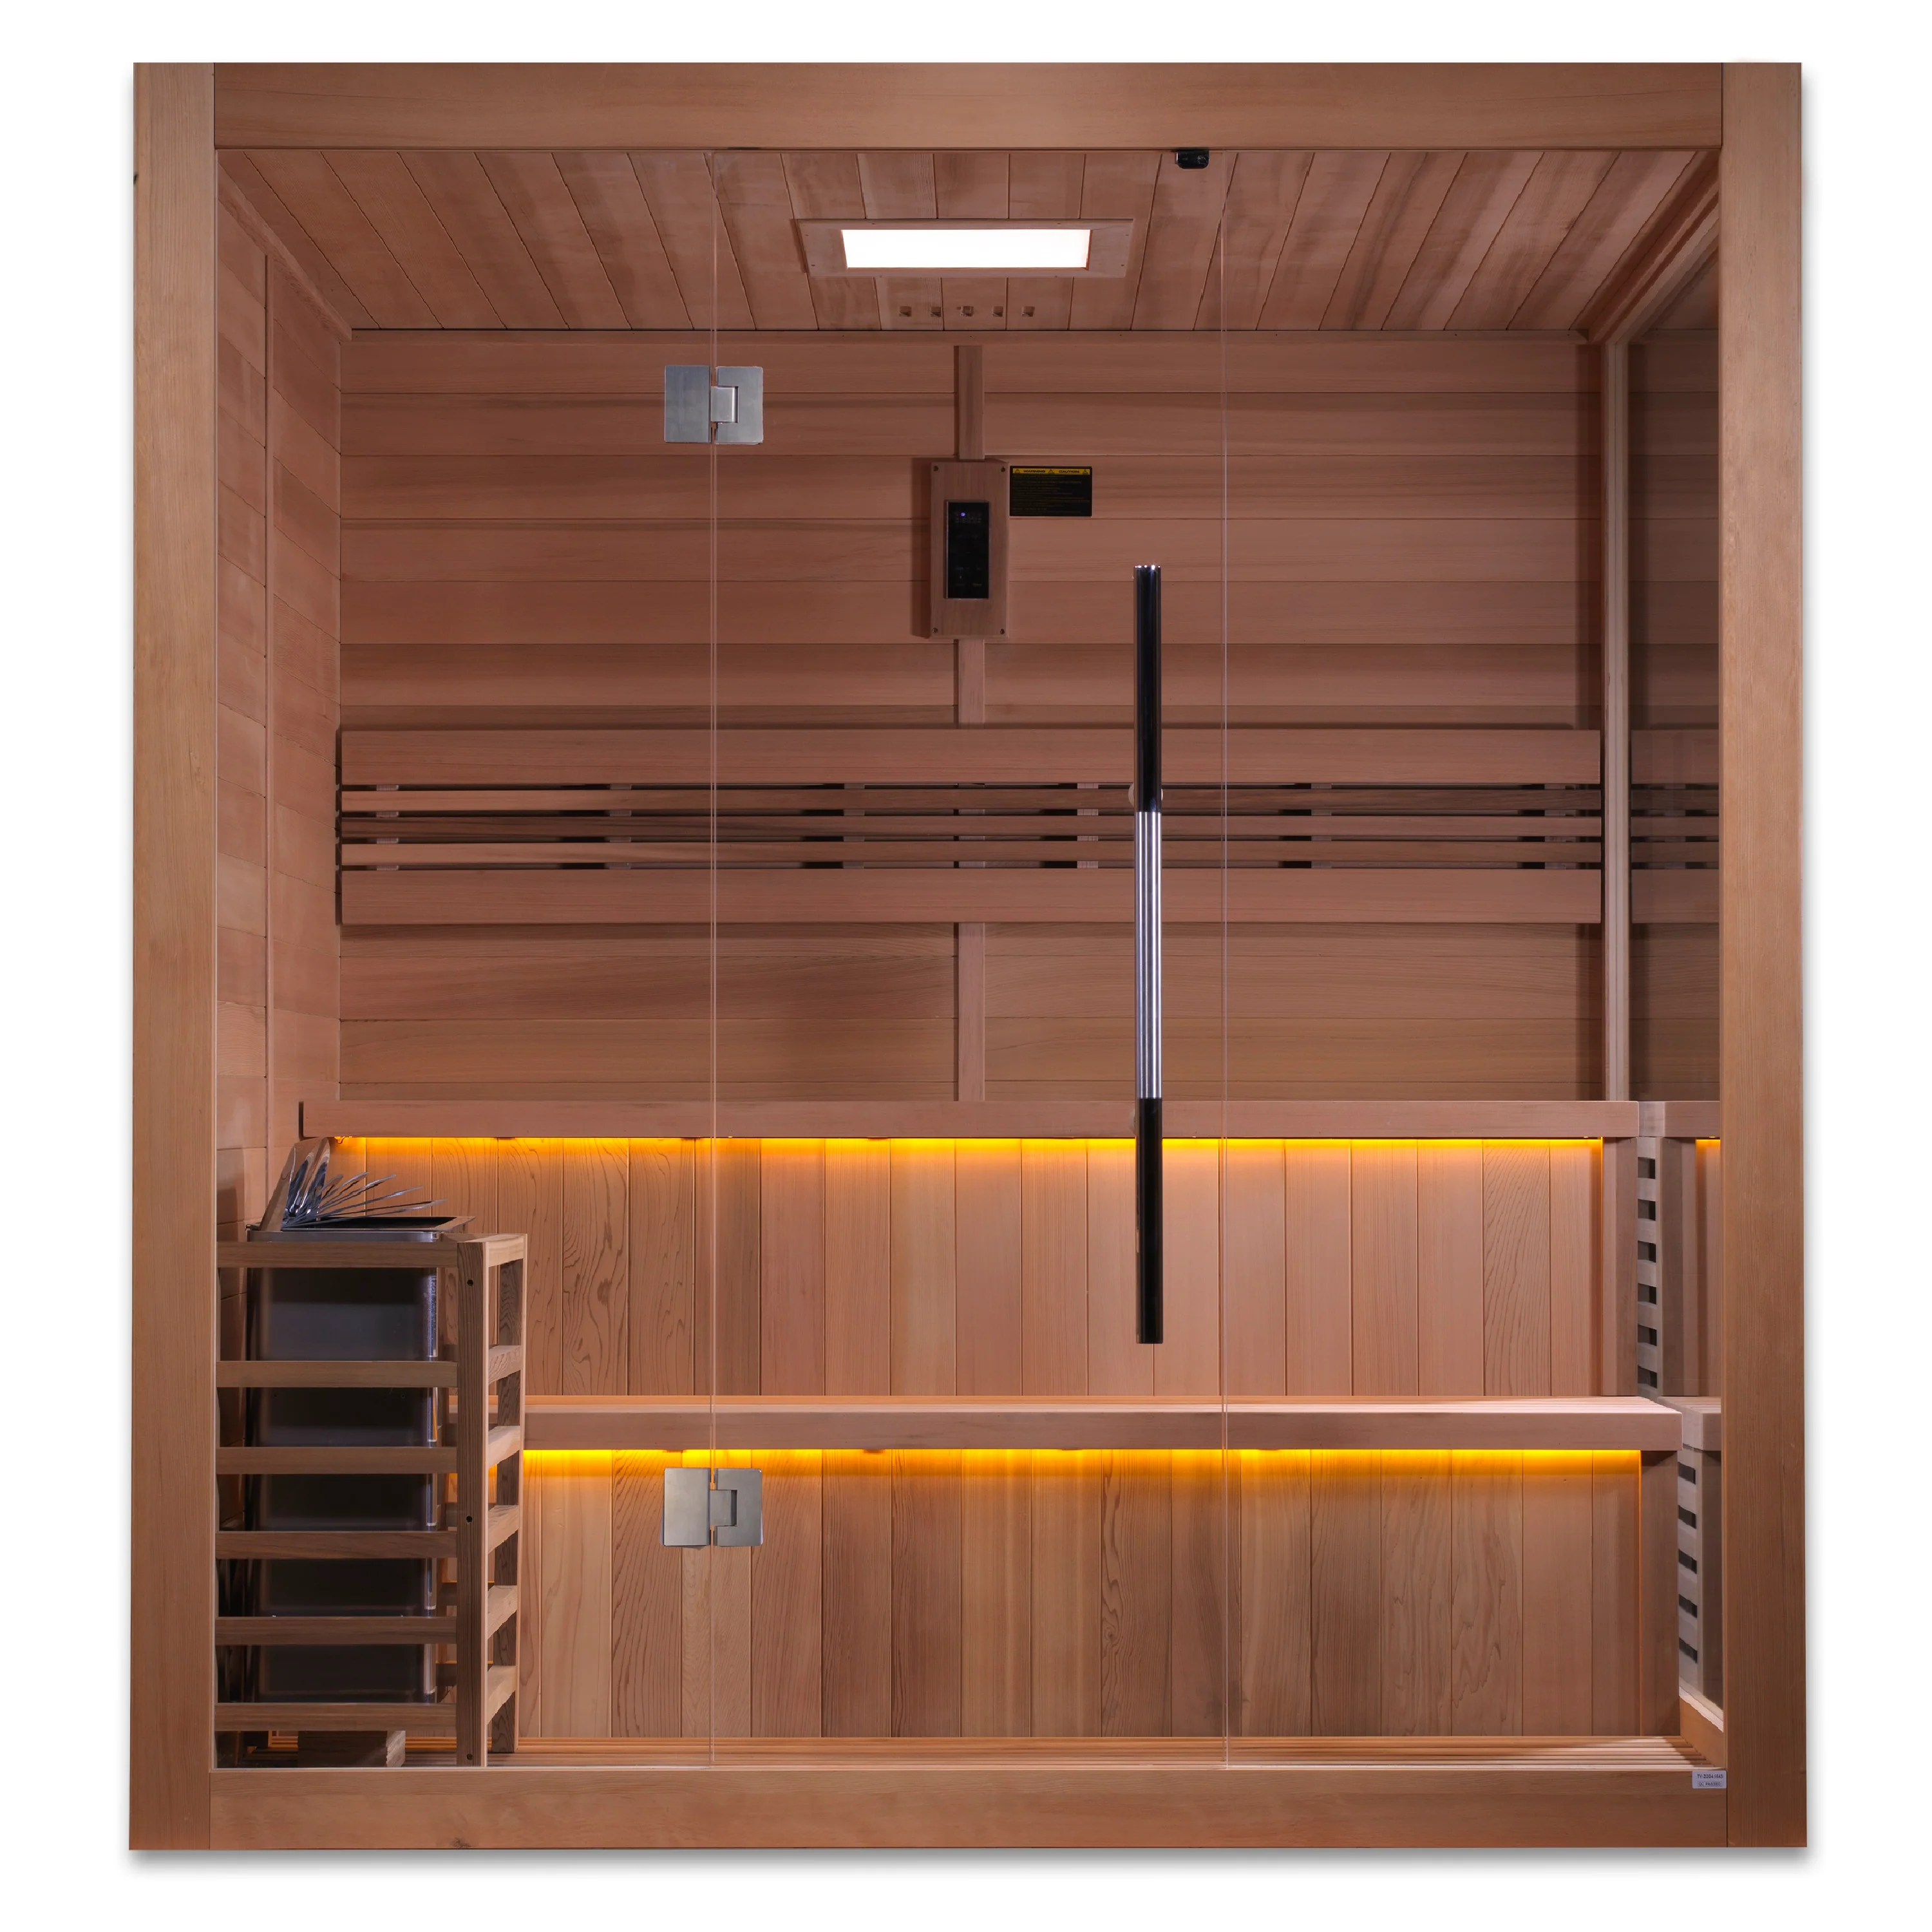 Golden Designs "Kuusamo Edition" 6 Person Indoor Traditional Steam Sauna